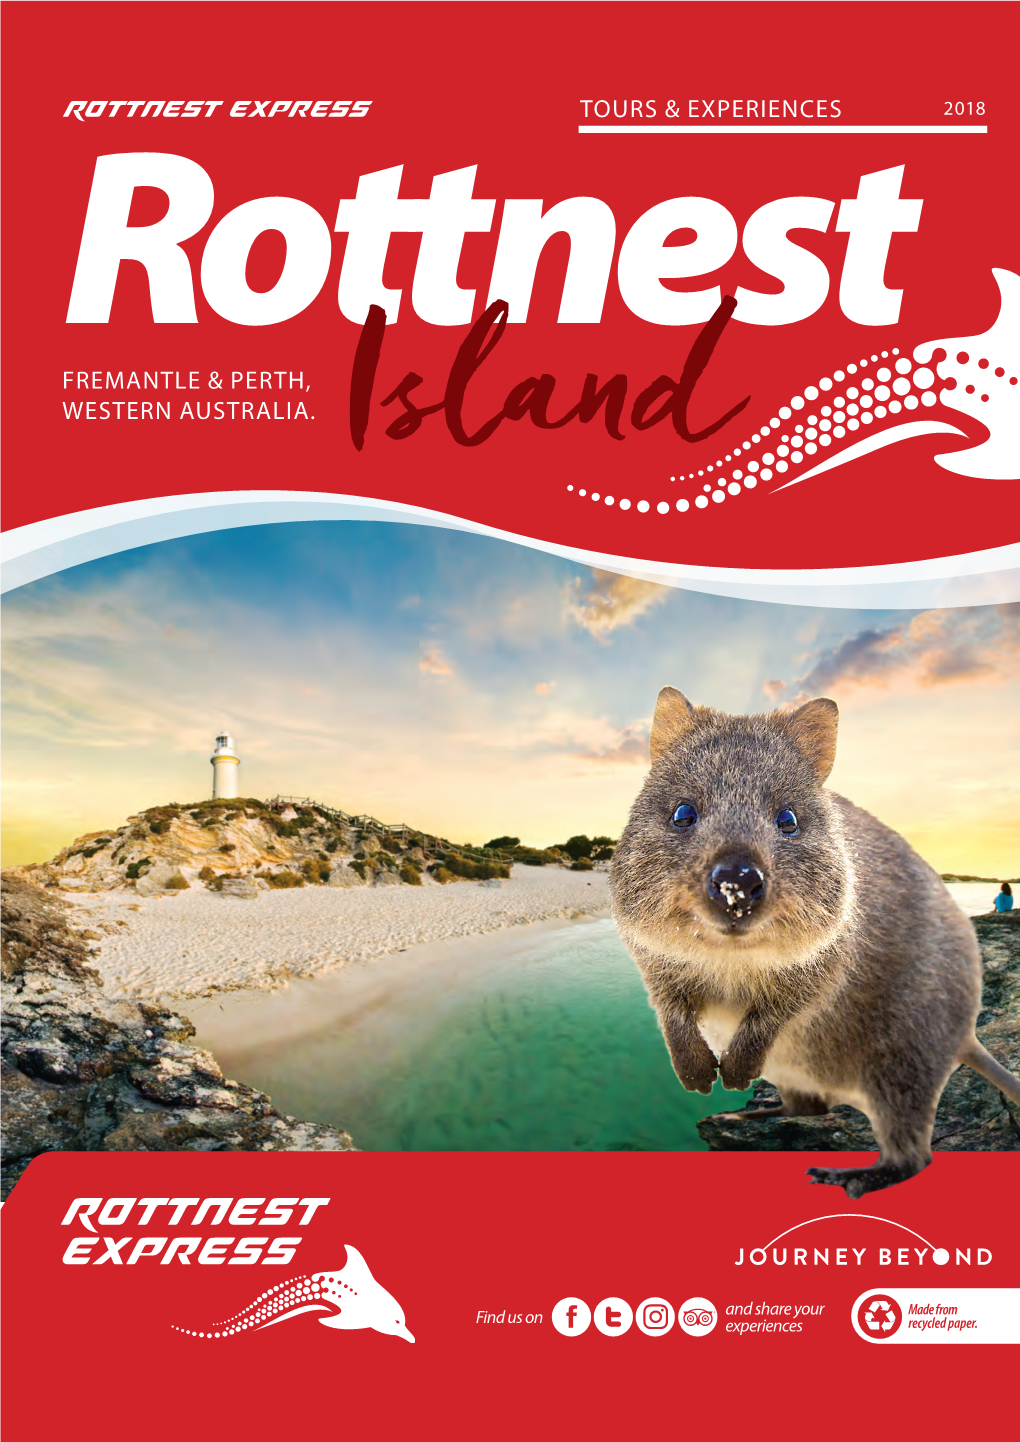 Rottnest FREMANTLE & PERTH, WESTERN AUSTRALIA